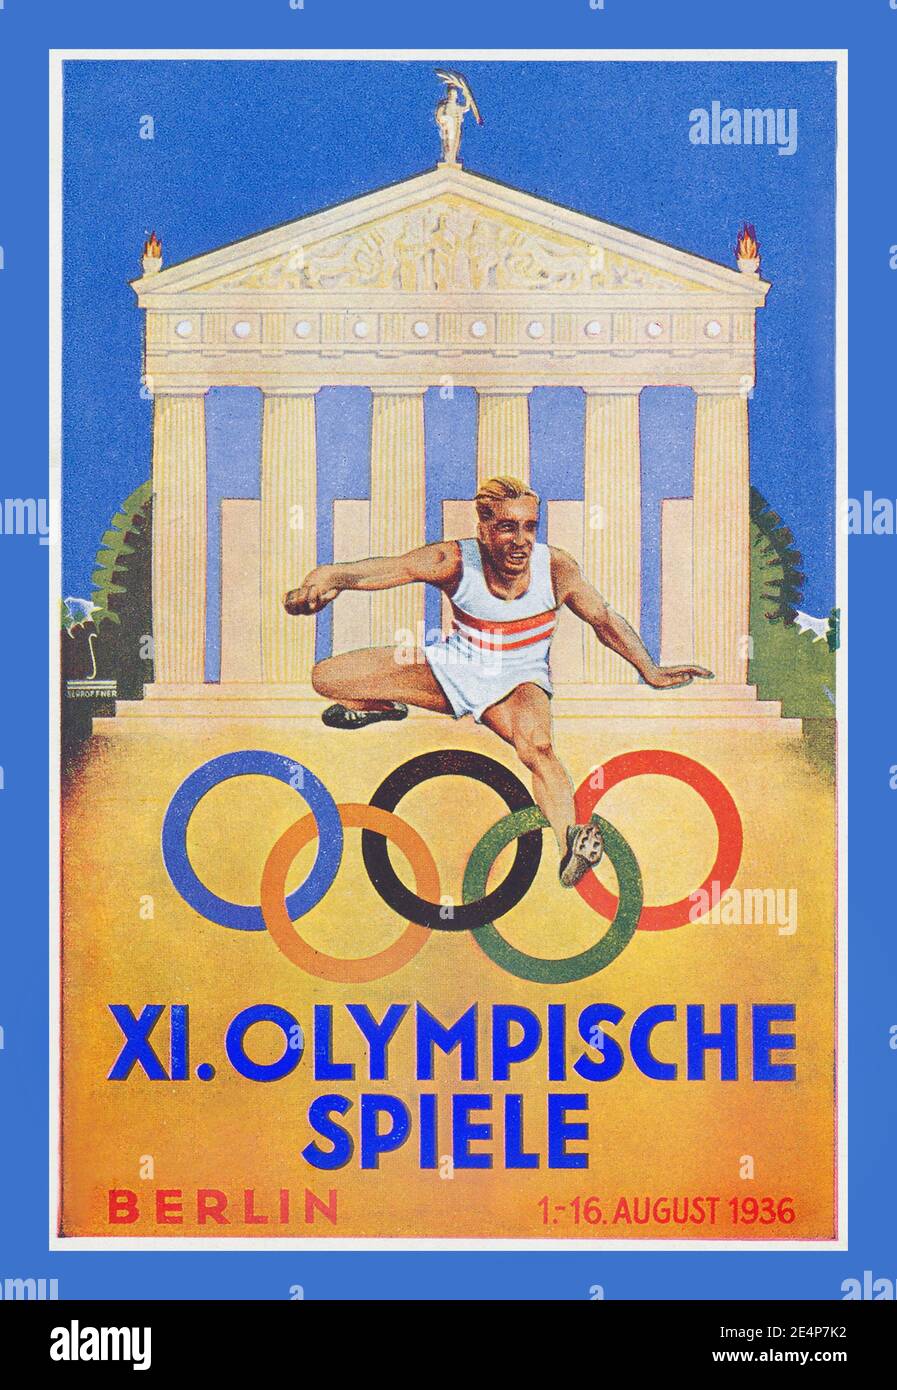 BERLIN Vintage Jeux Olympiques des années 1930 X1 vintage Sports Poster 1936, Berlin Allemagne nazie OLYMPICHE SPIELE 1-16 août 1936 Berlin Allemagne Banque D'Images